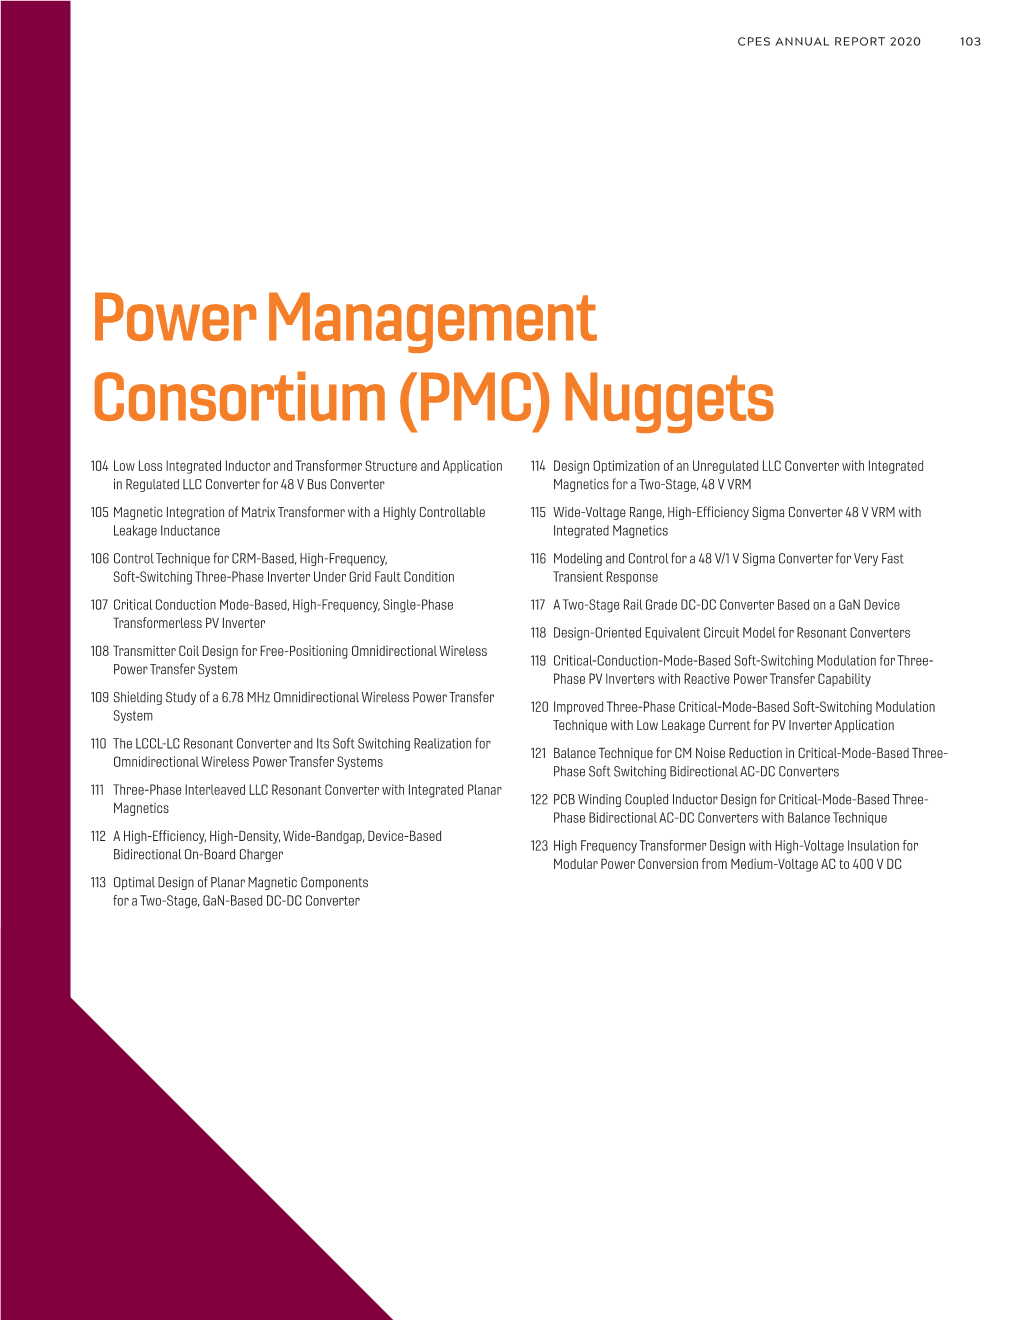 Power Management Consortium (PMC) Nuggets